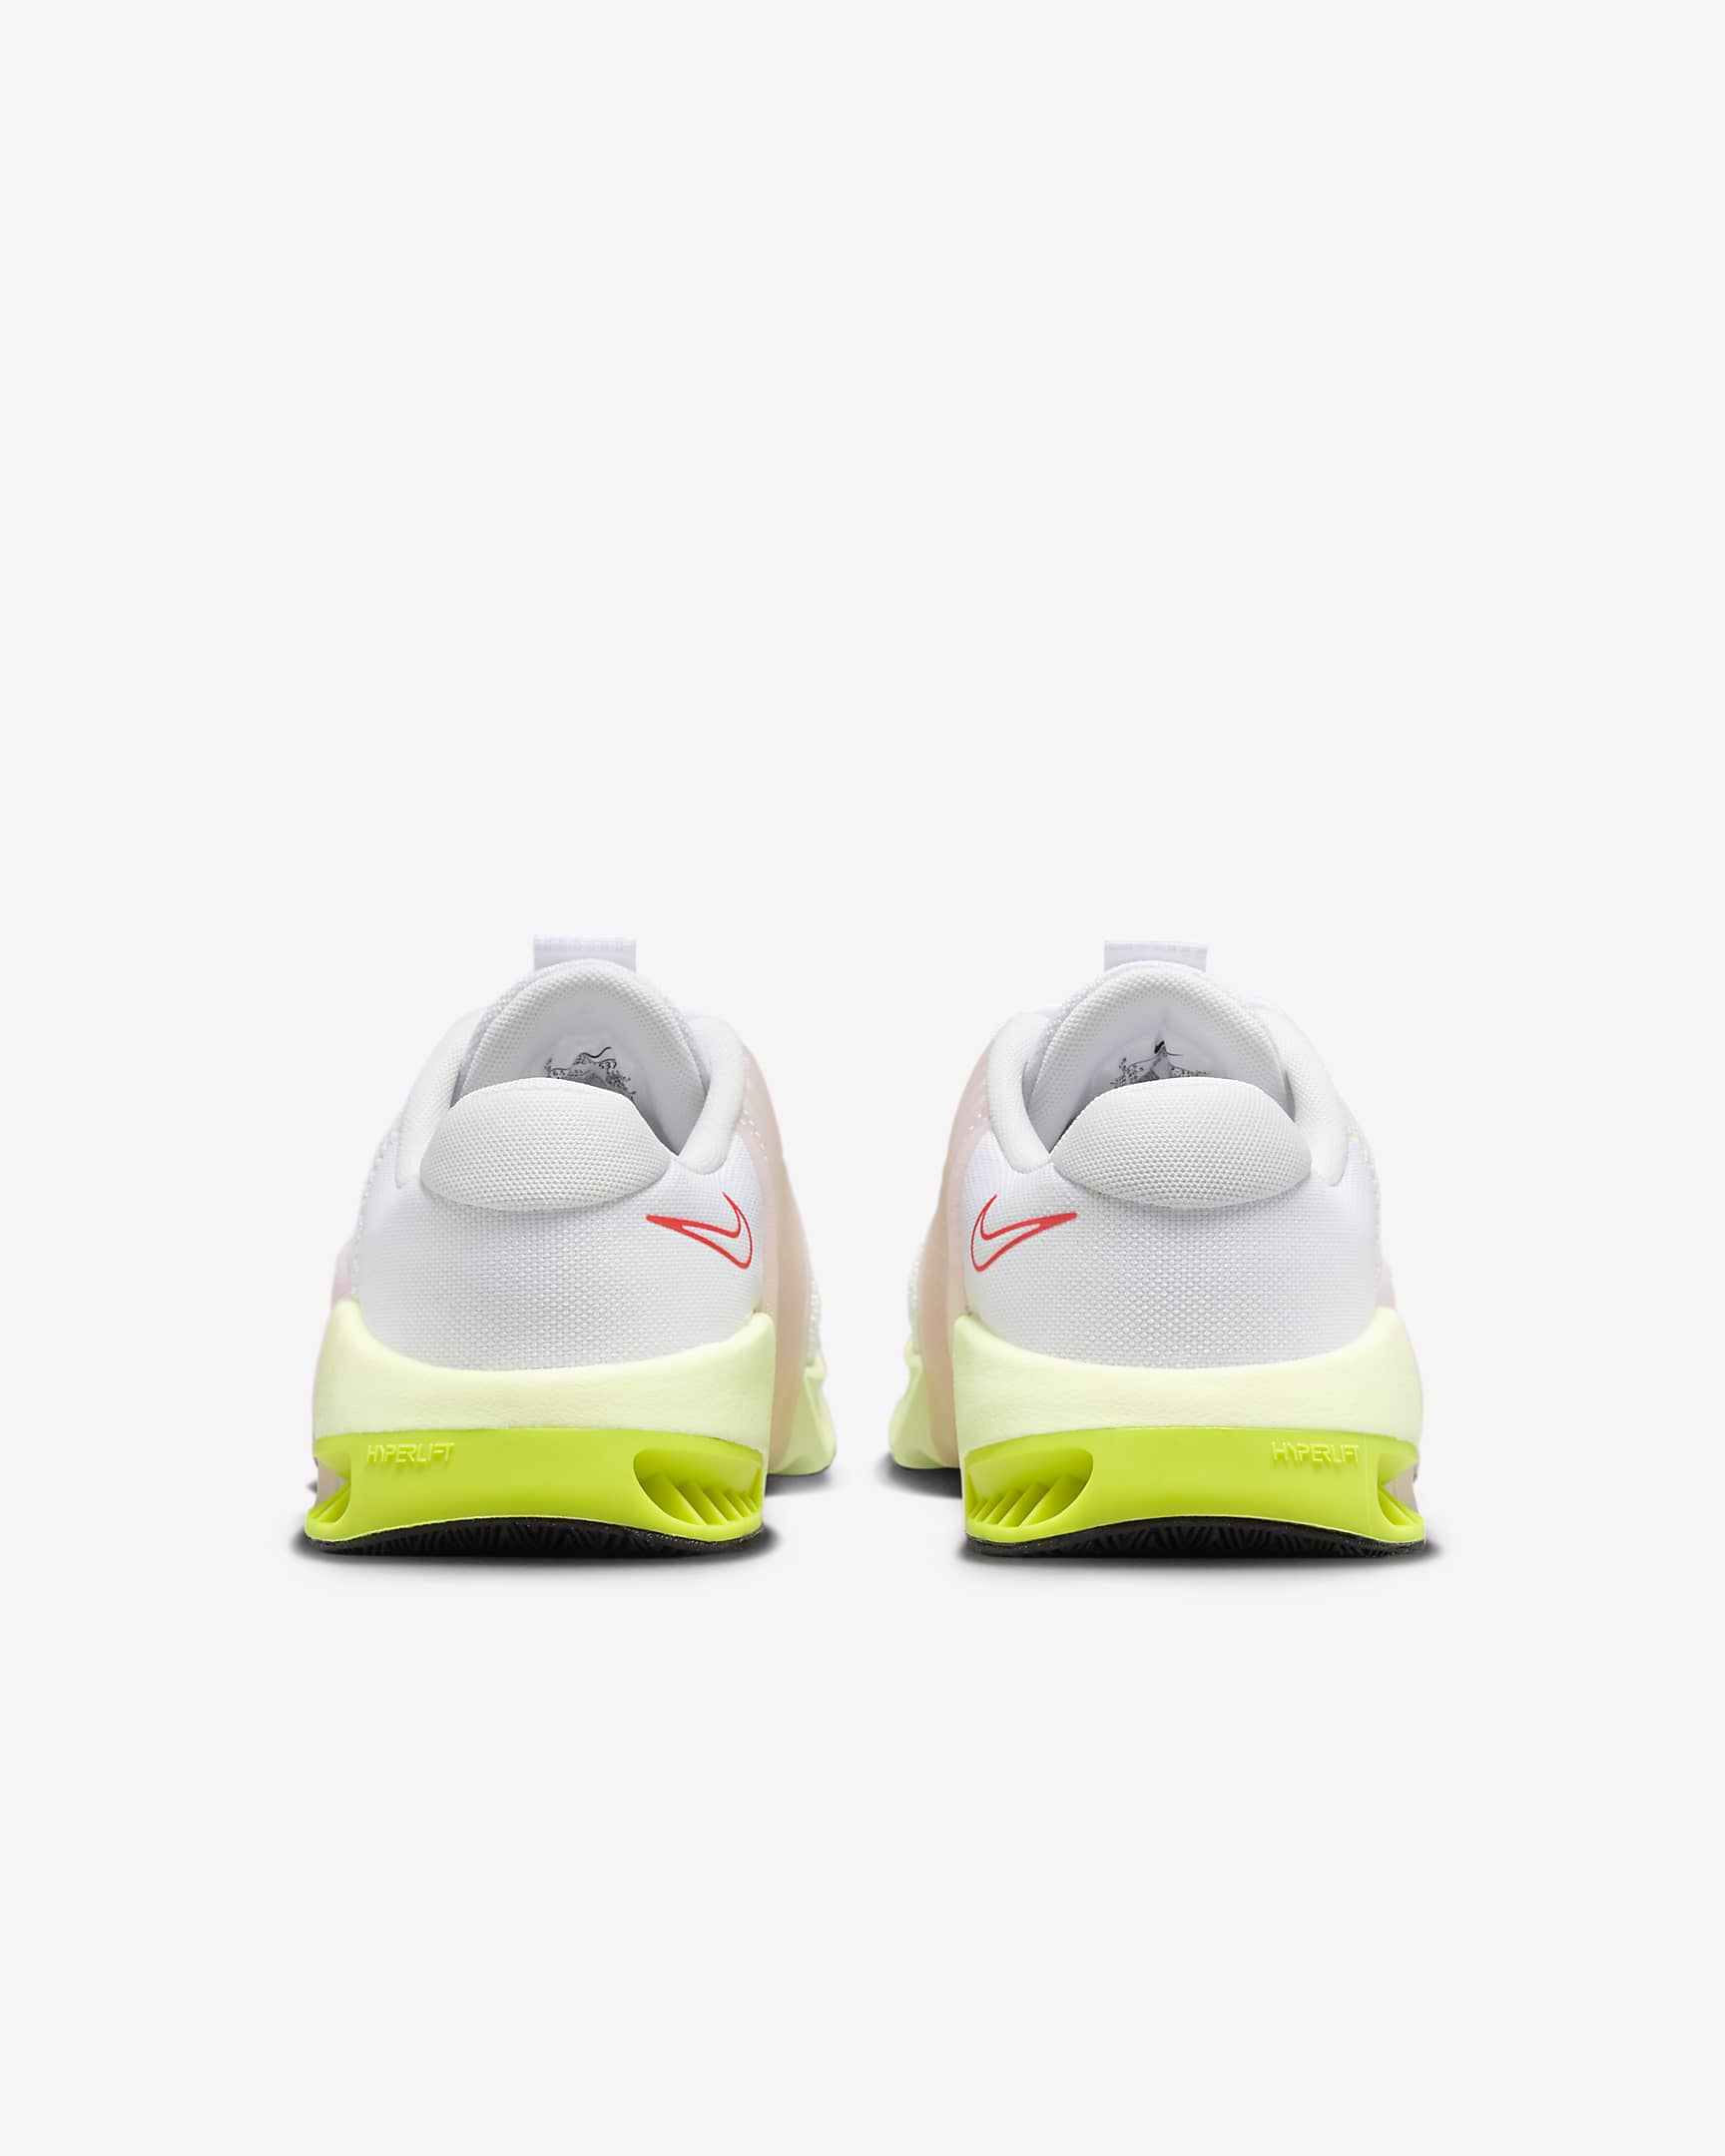 Nike Metcon 9 Women's Workout Shoes - White/Volt/Barely Volt/Bright Crimson